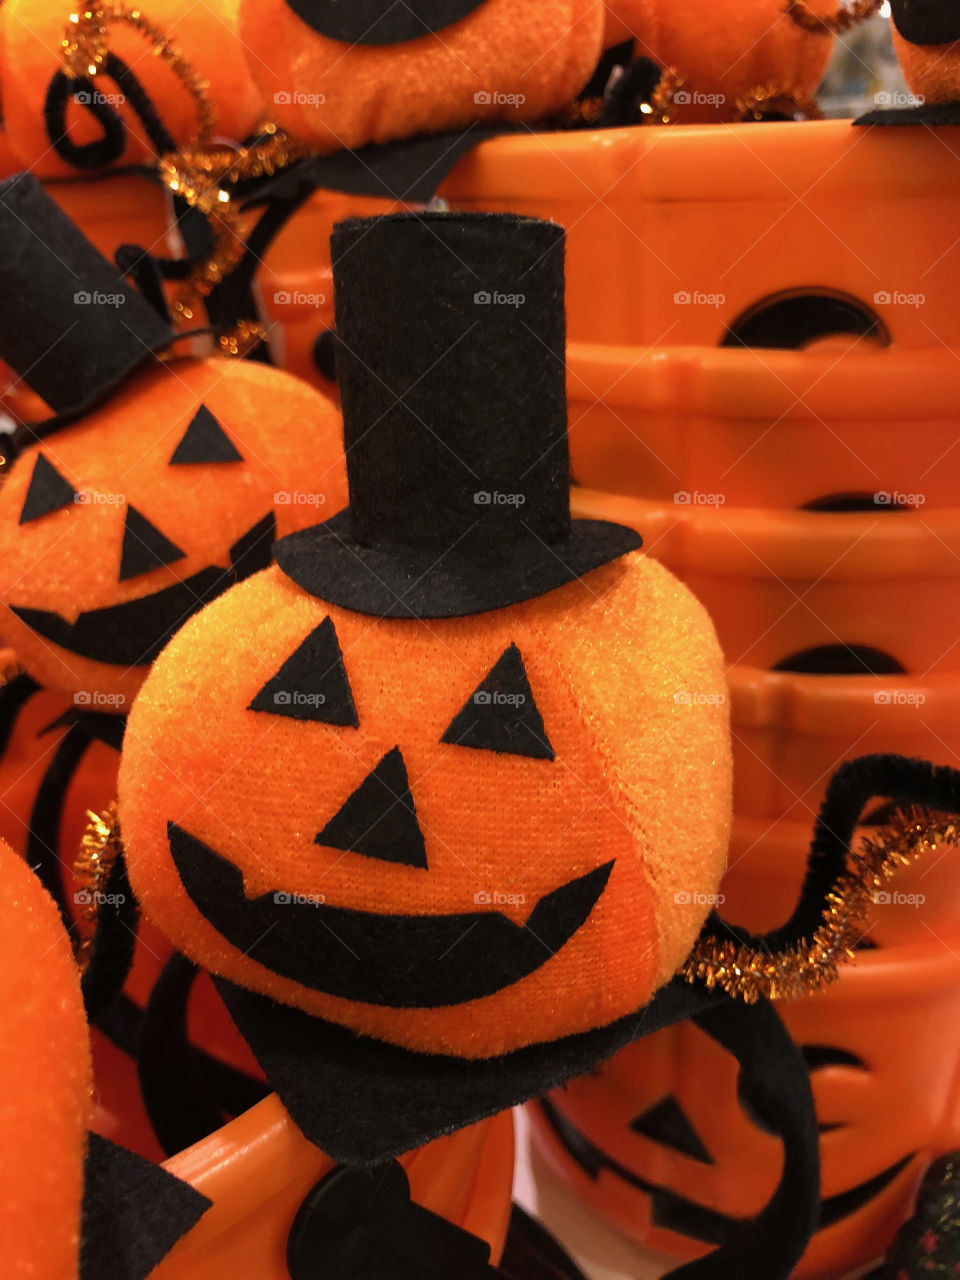 Pumpkin head halloween decoration